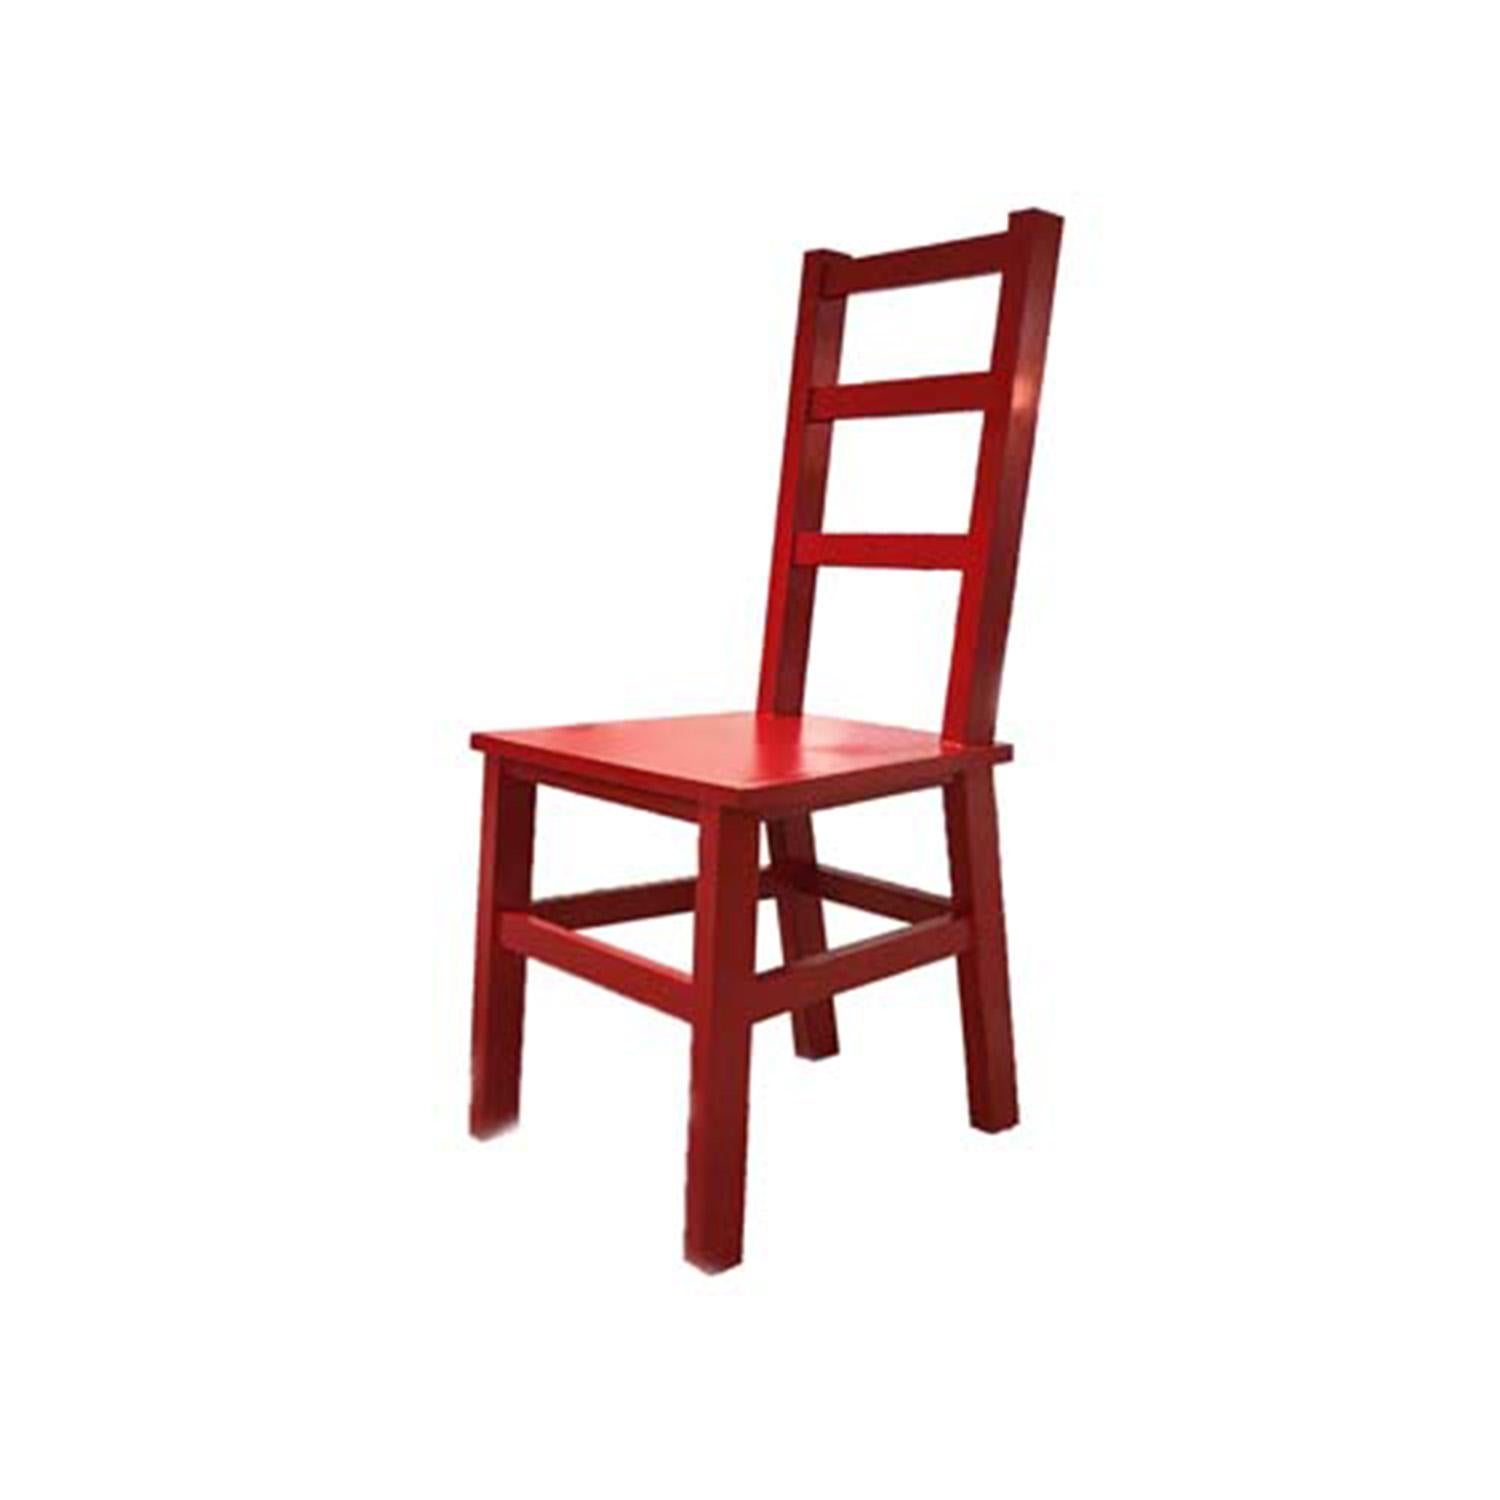 Giuseppe Palumbo Figurative Sculpture - Chair 4 (Red)